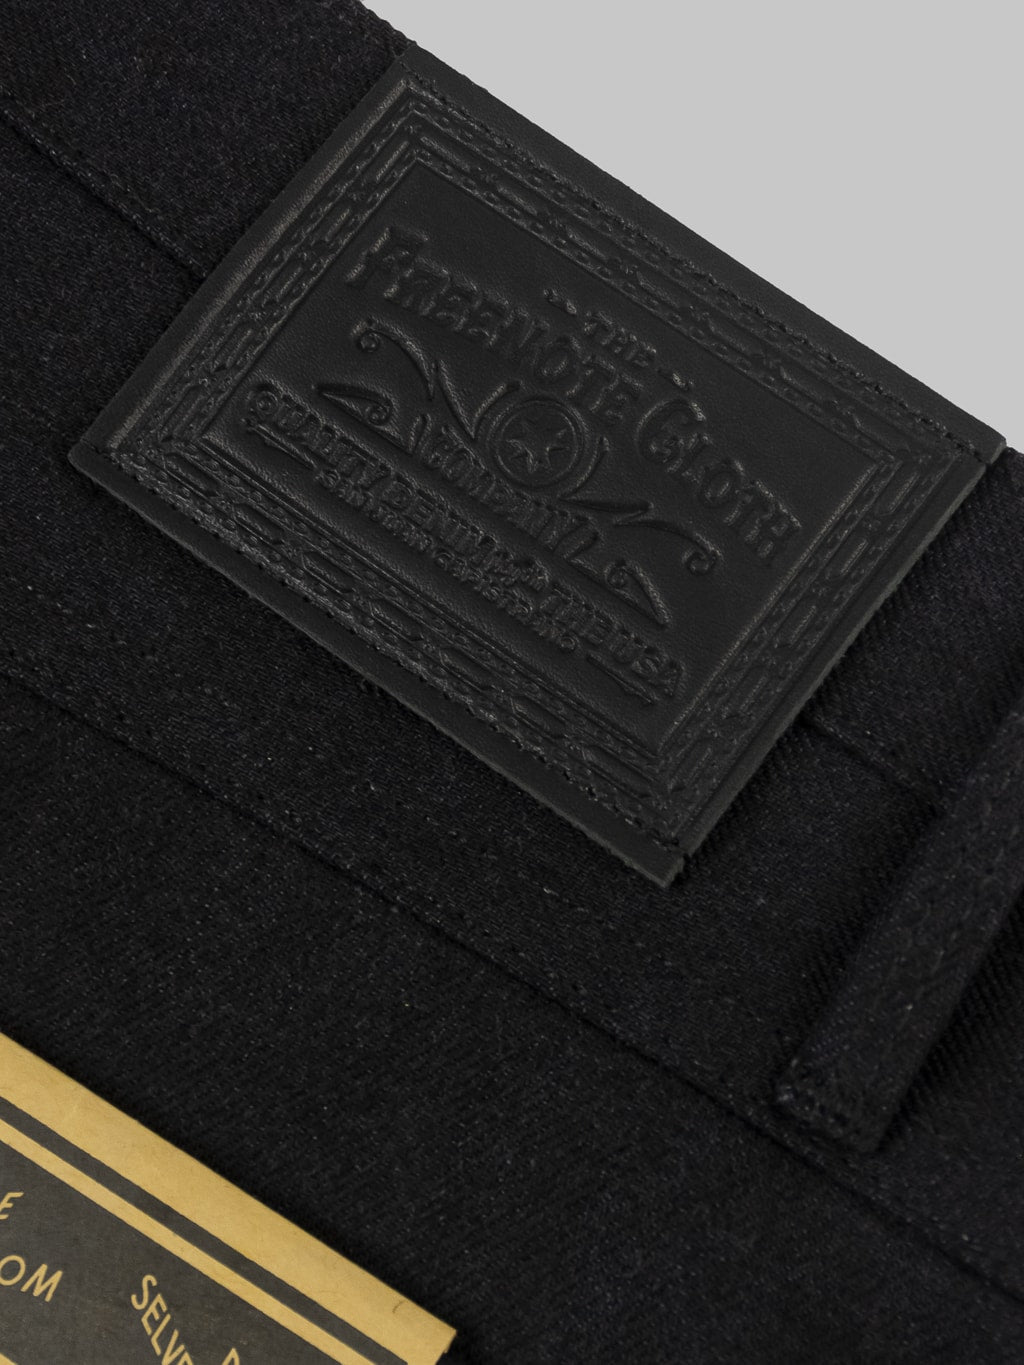 Freenote Cloth Rios Black Grey Japanese Denim Slim Straight Jeans leather patch